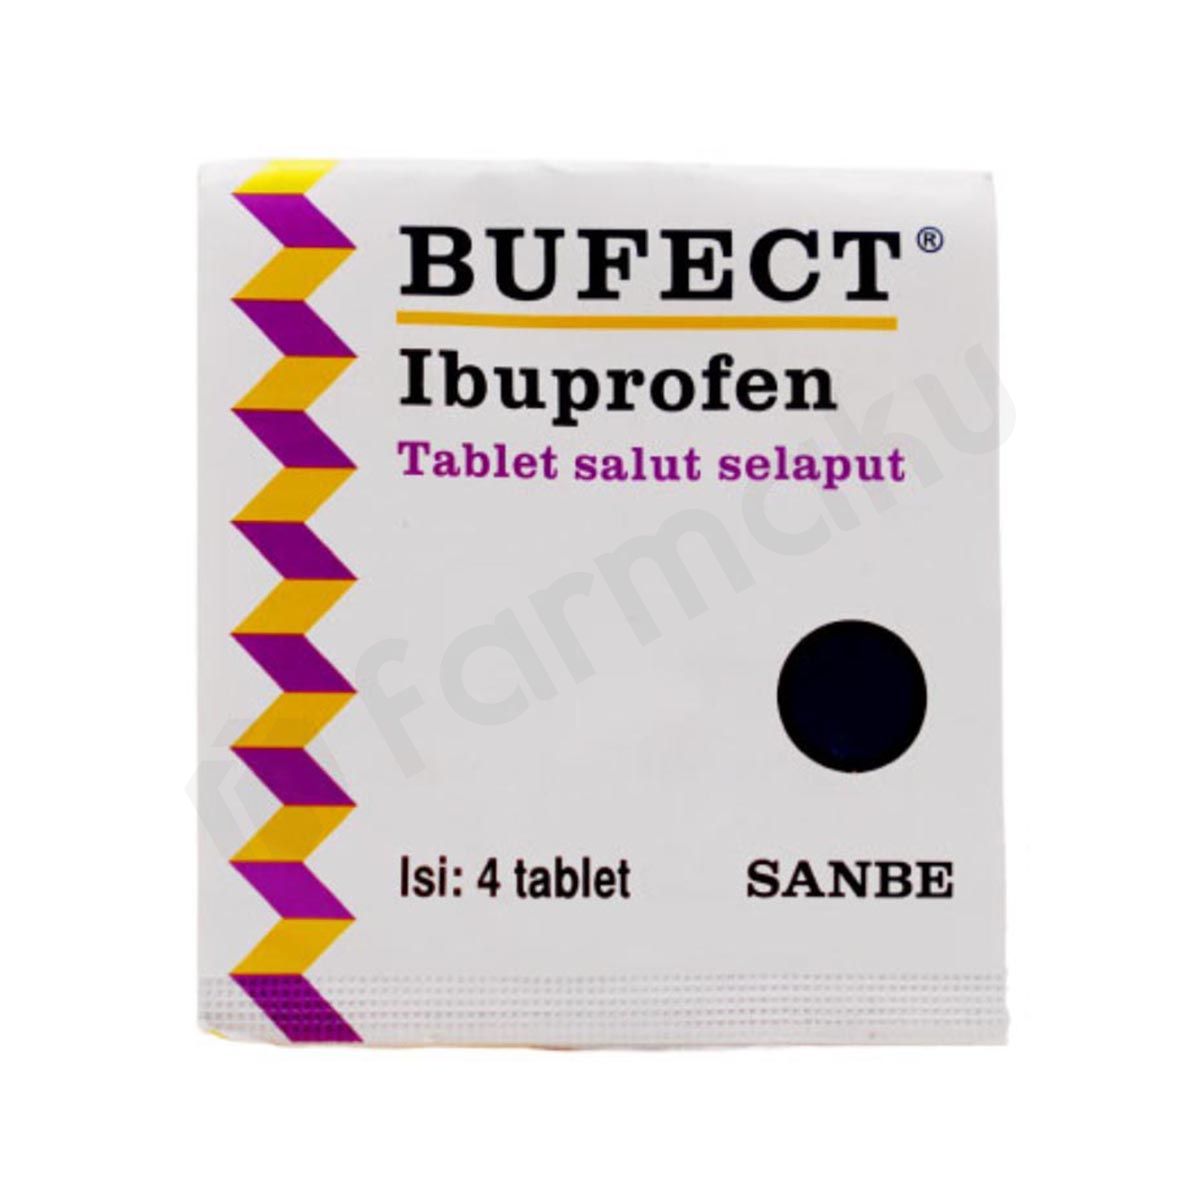 Bufect Ibuprofen